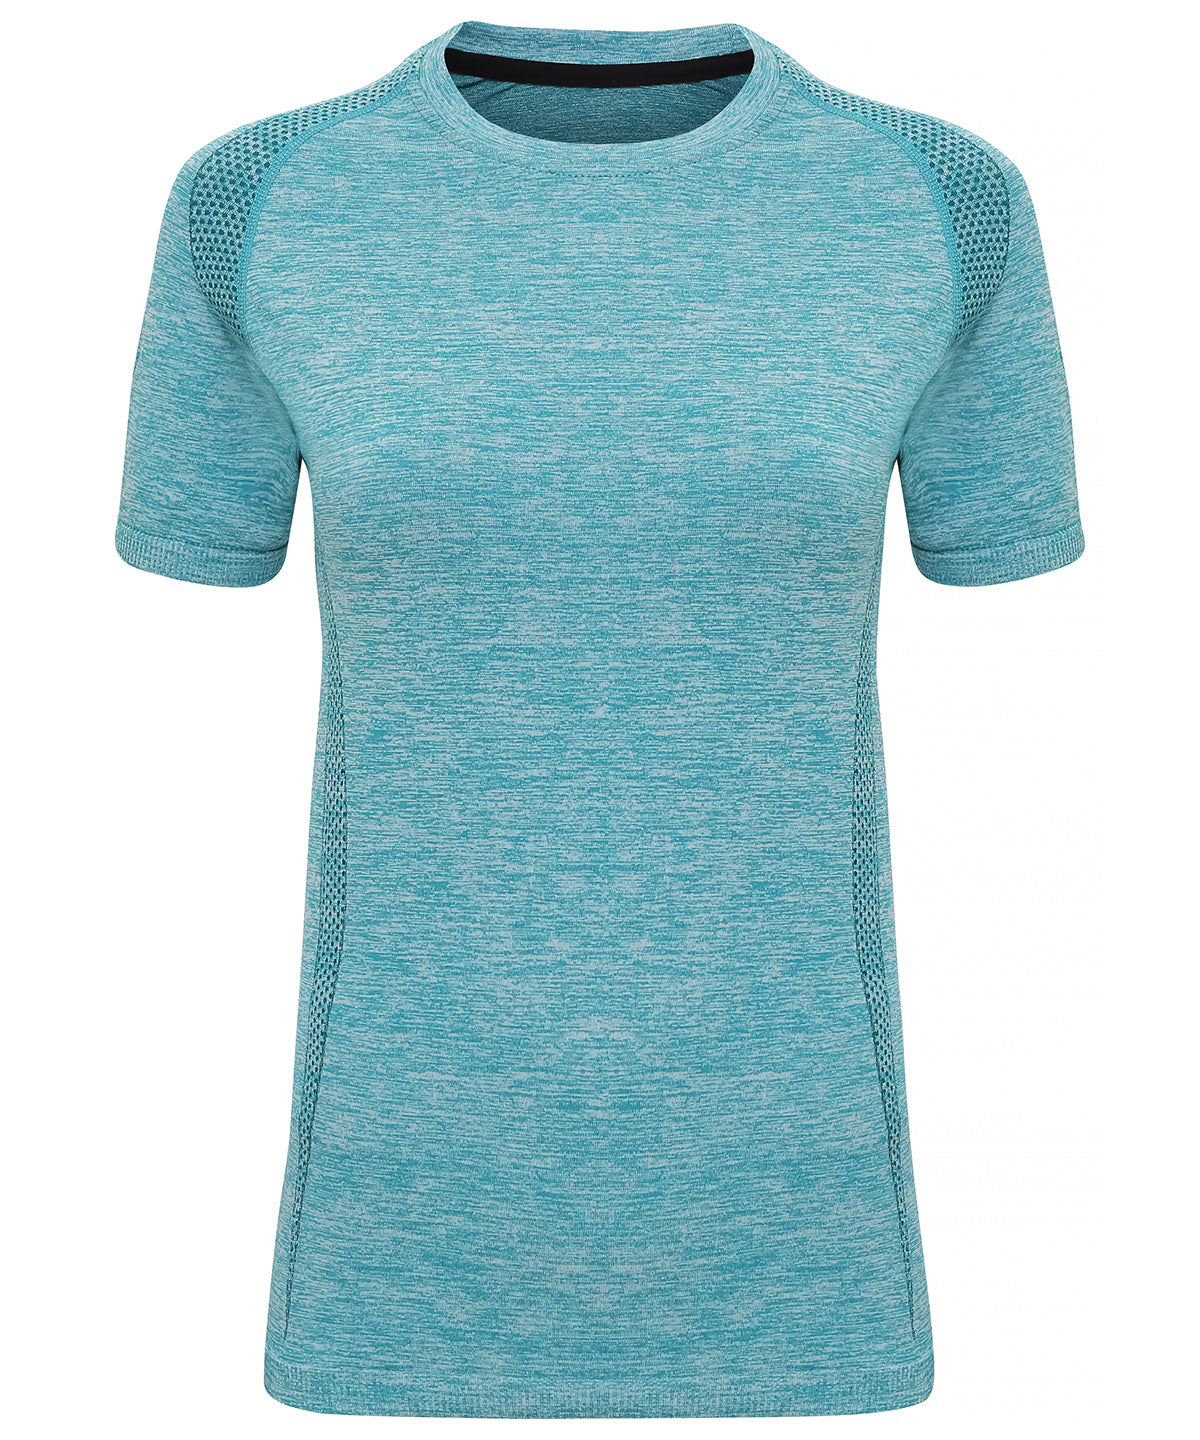 Womens TriDri® seamless 3D fit multi-sport performance short sleeve top | Turquoise